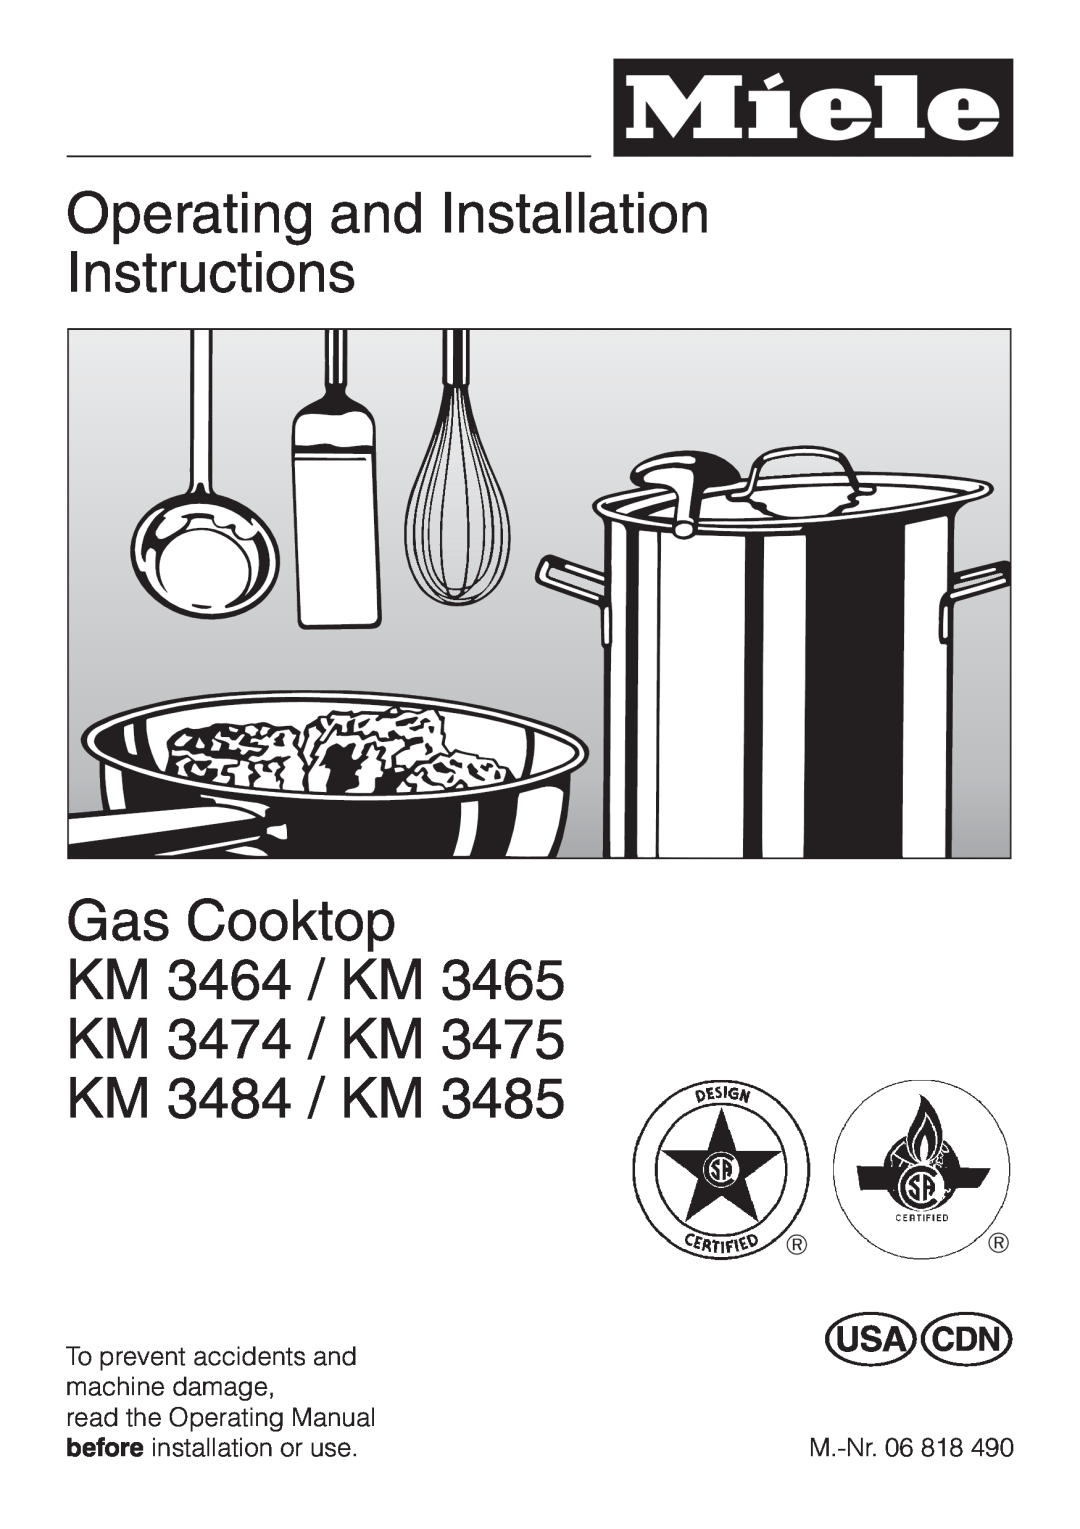 Miele KM 3465, KM 3475, KM 3464 installation instructions Operating and Installation Instructions, Gas Cooktop 